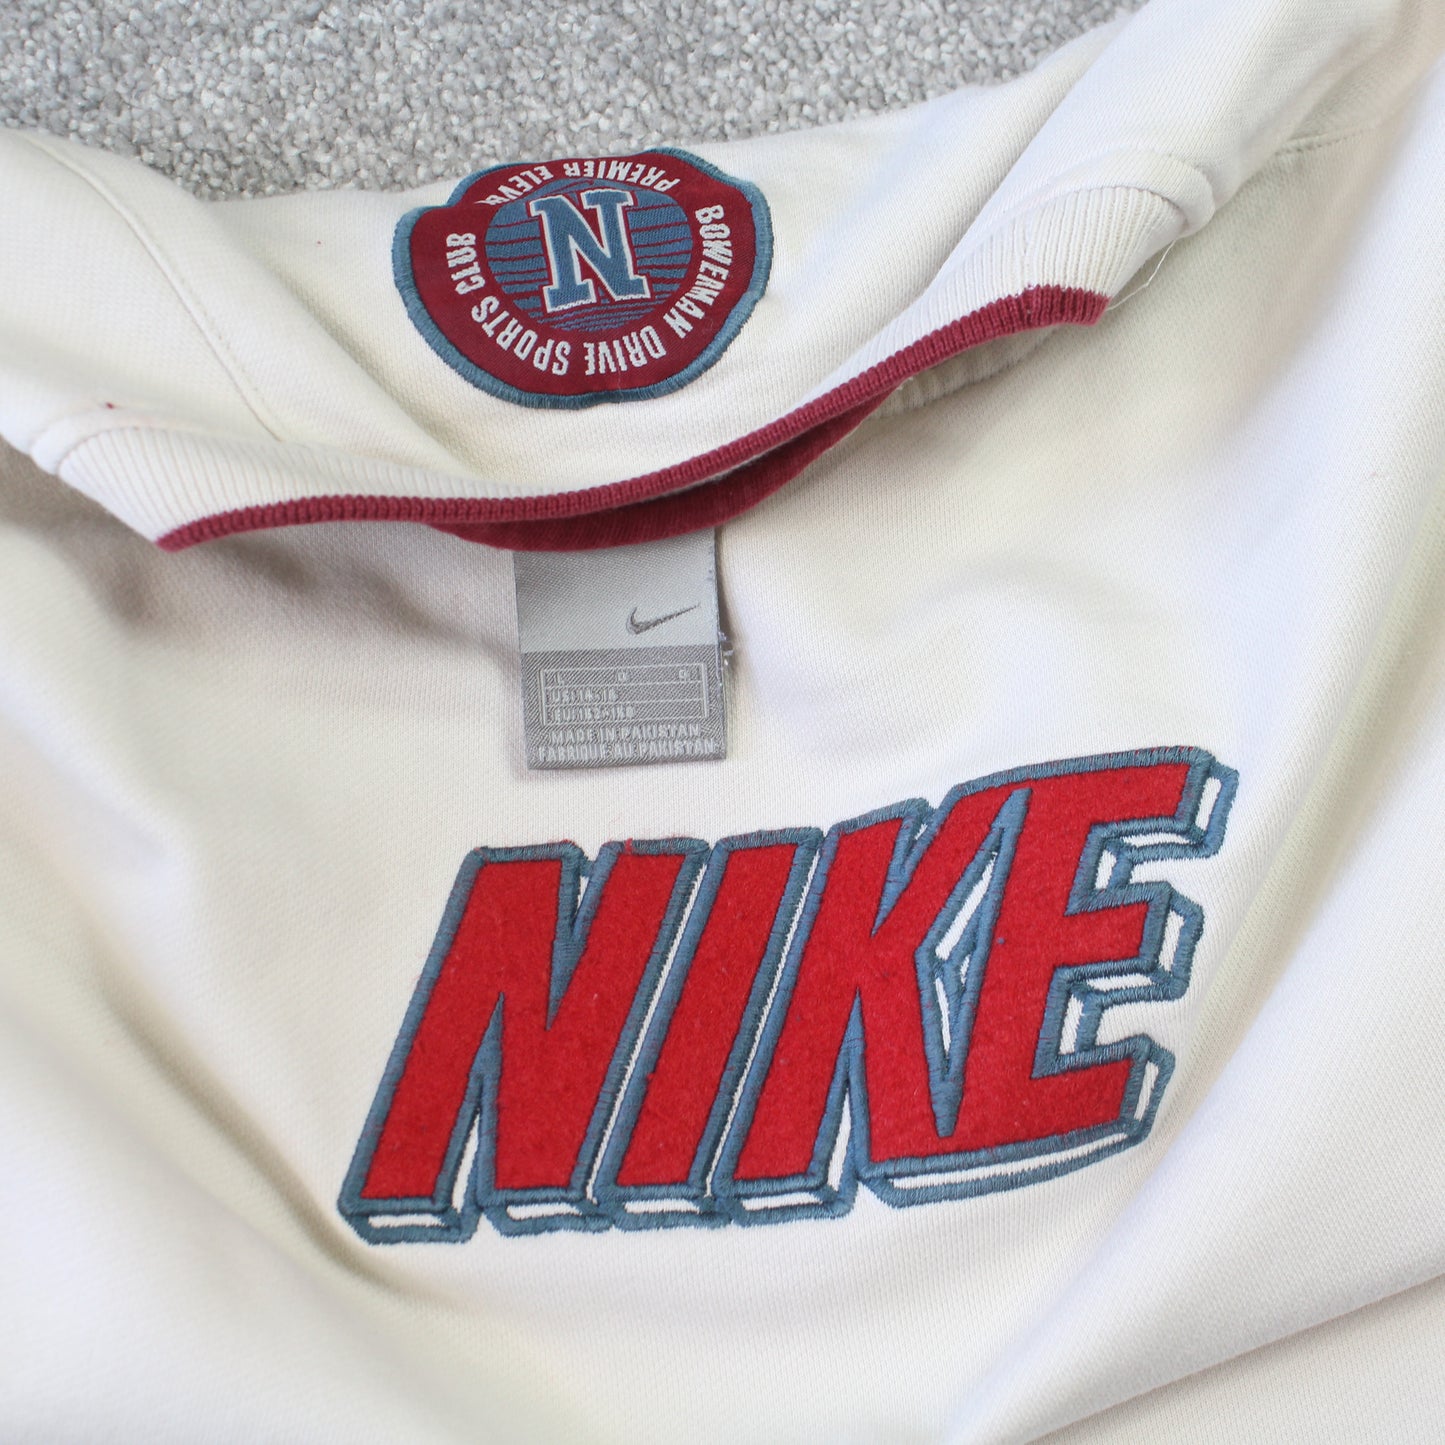 SUPER RARE Vintage 00s Cream Nike Sweatshirt - (S)